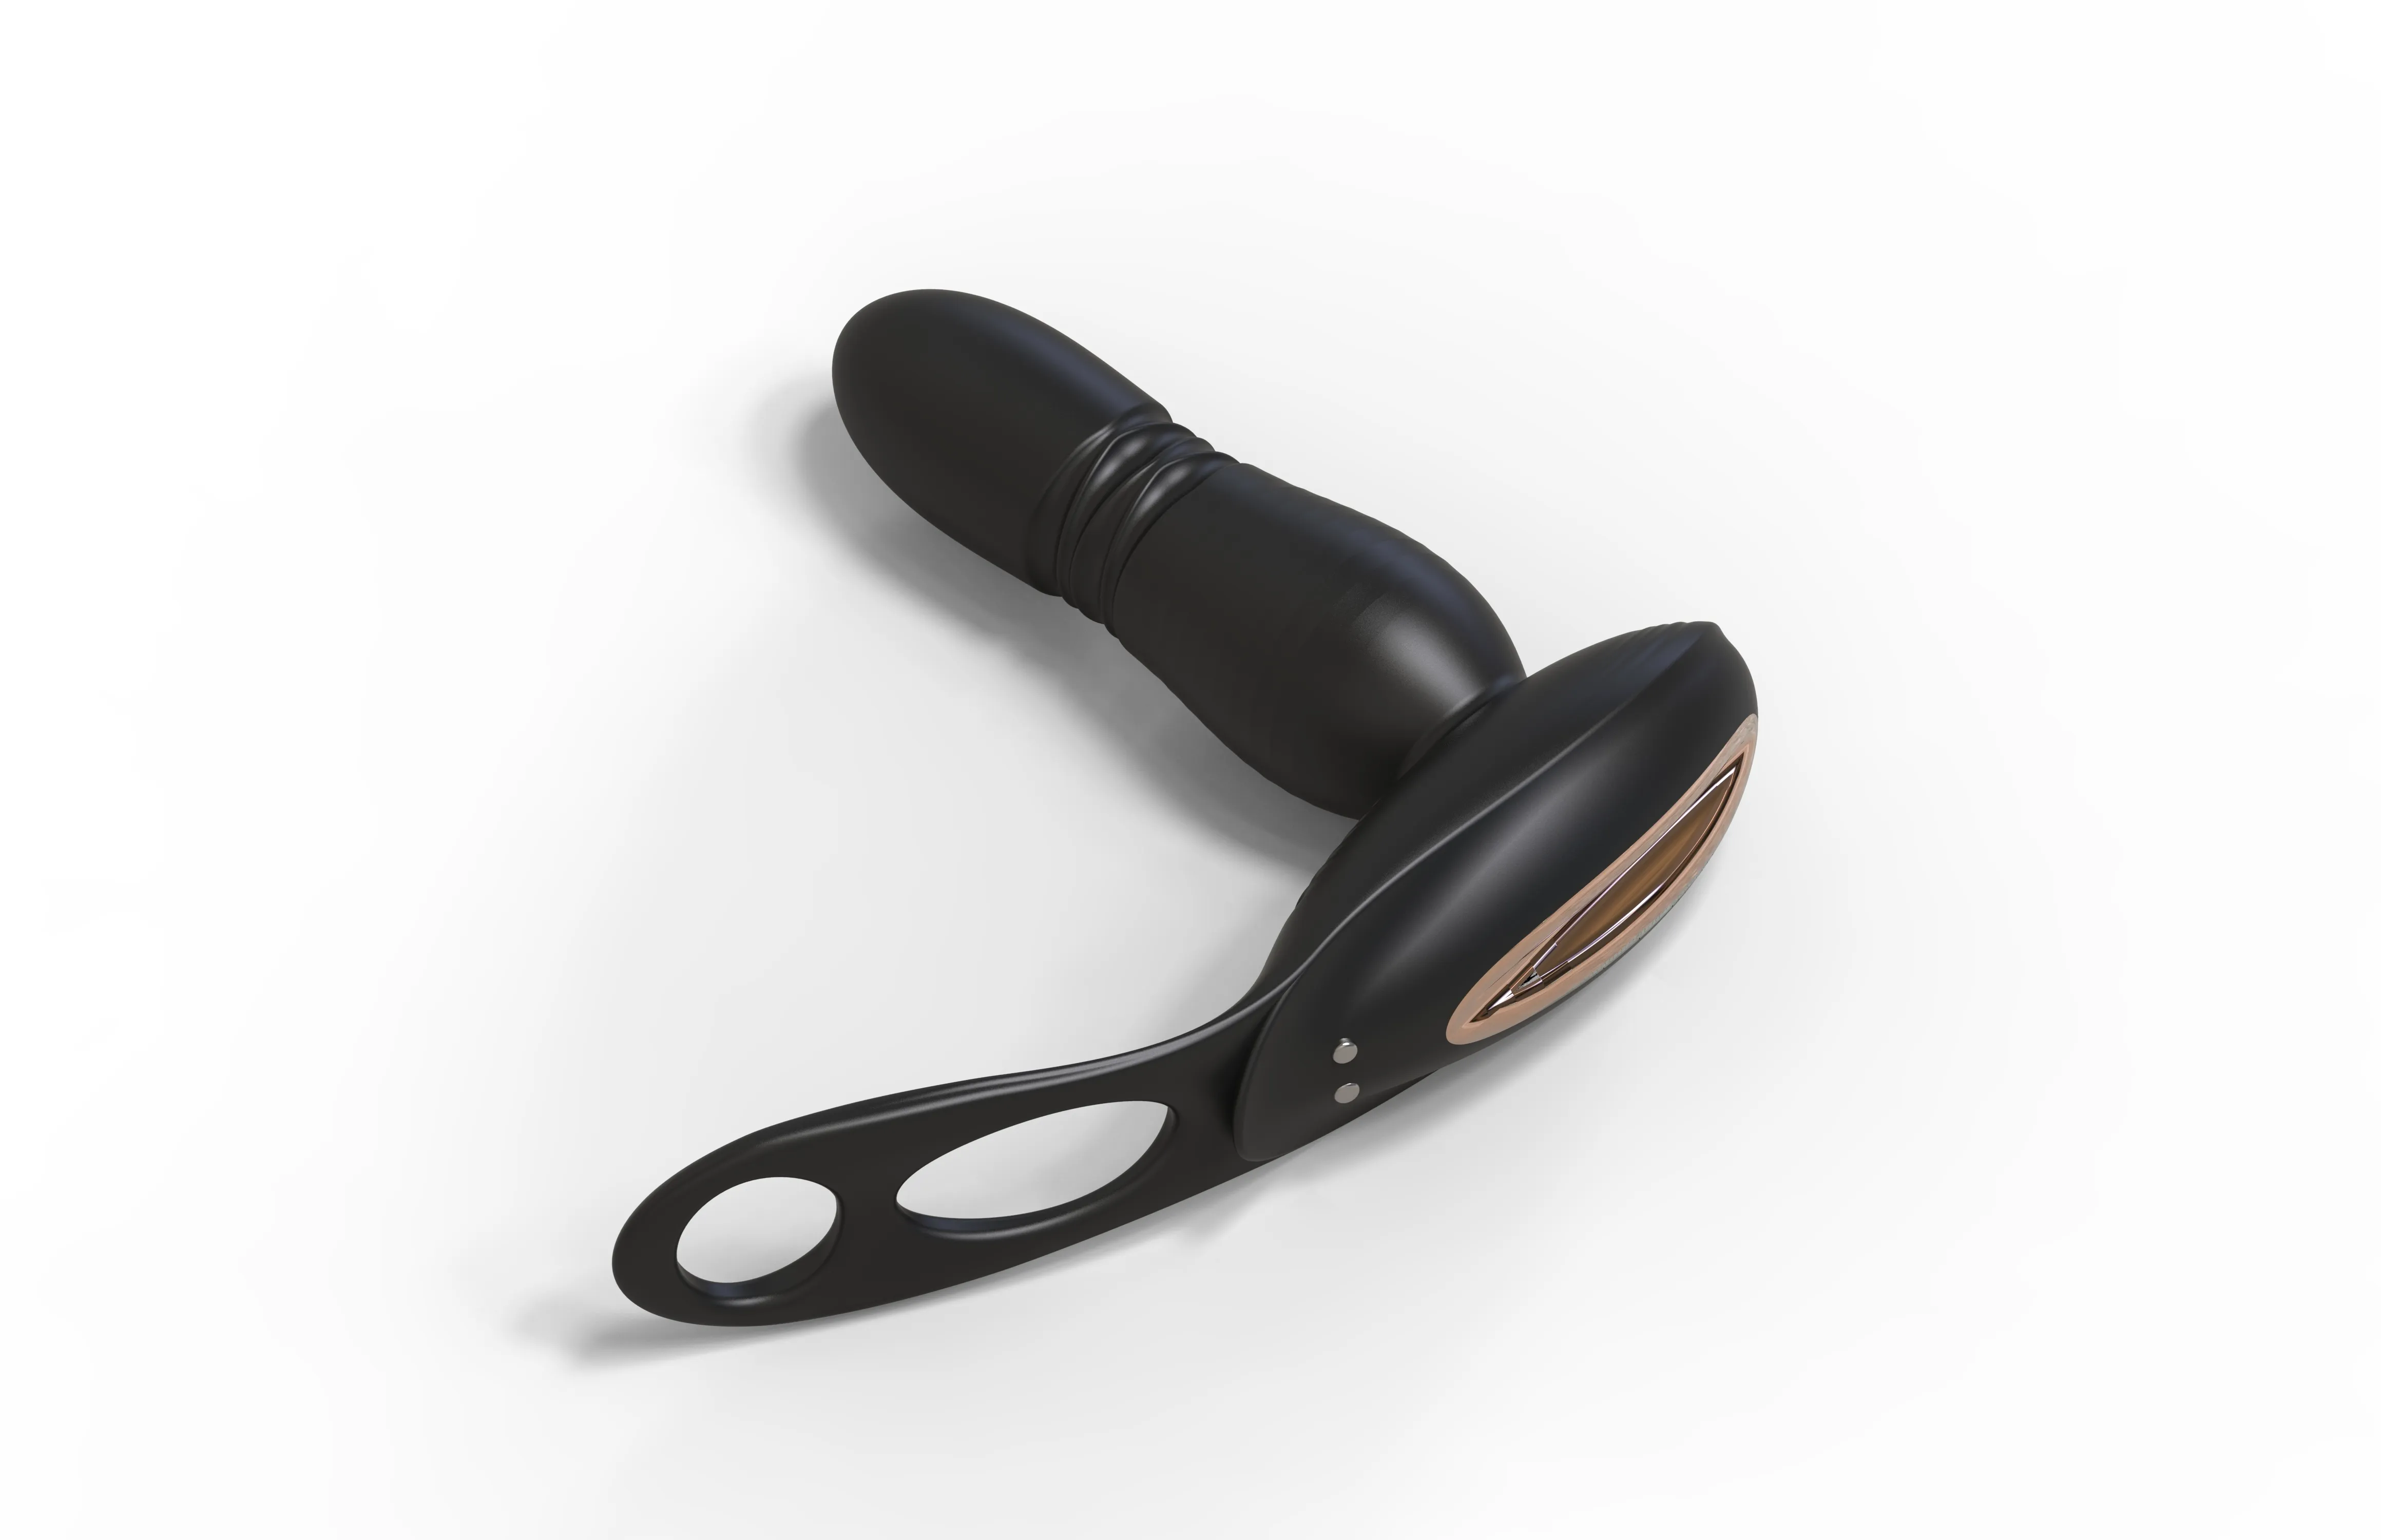 Remote Control Anal Plug Vibrators for Men Prostate Massager Vagina G Spot Stimulator Silica Gel Ass sexy Toys Adult